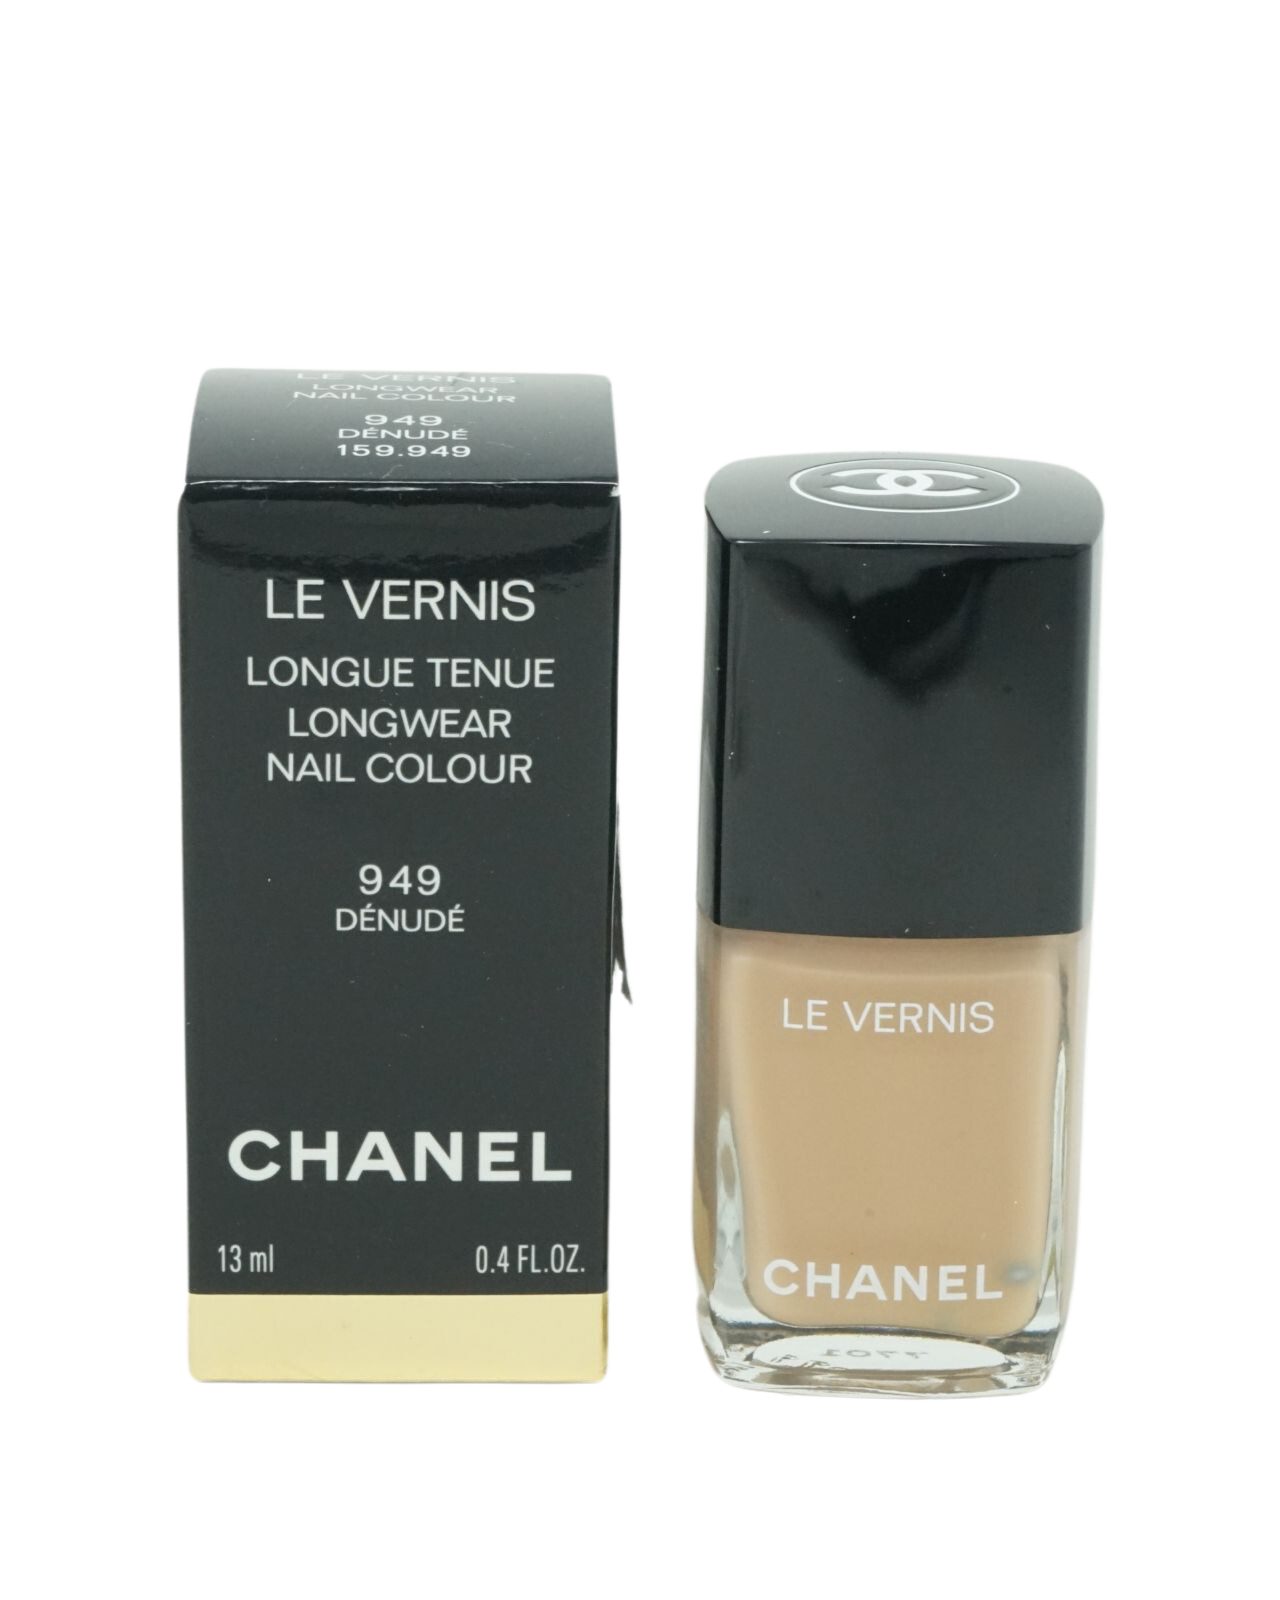 CHANEL Nagellack Chanel Le Vernis Longwear Nagellack 13ml 949 Denude